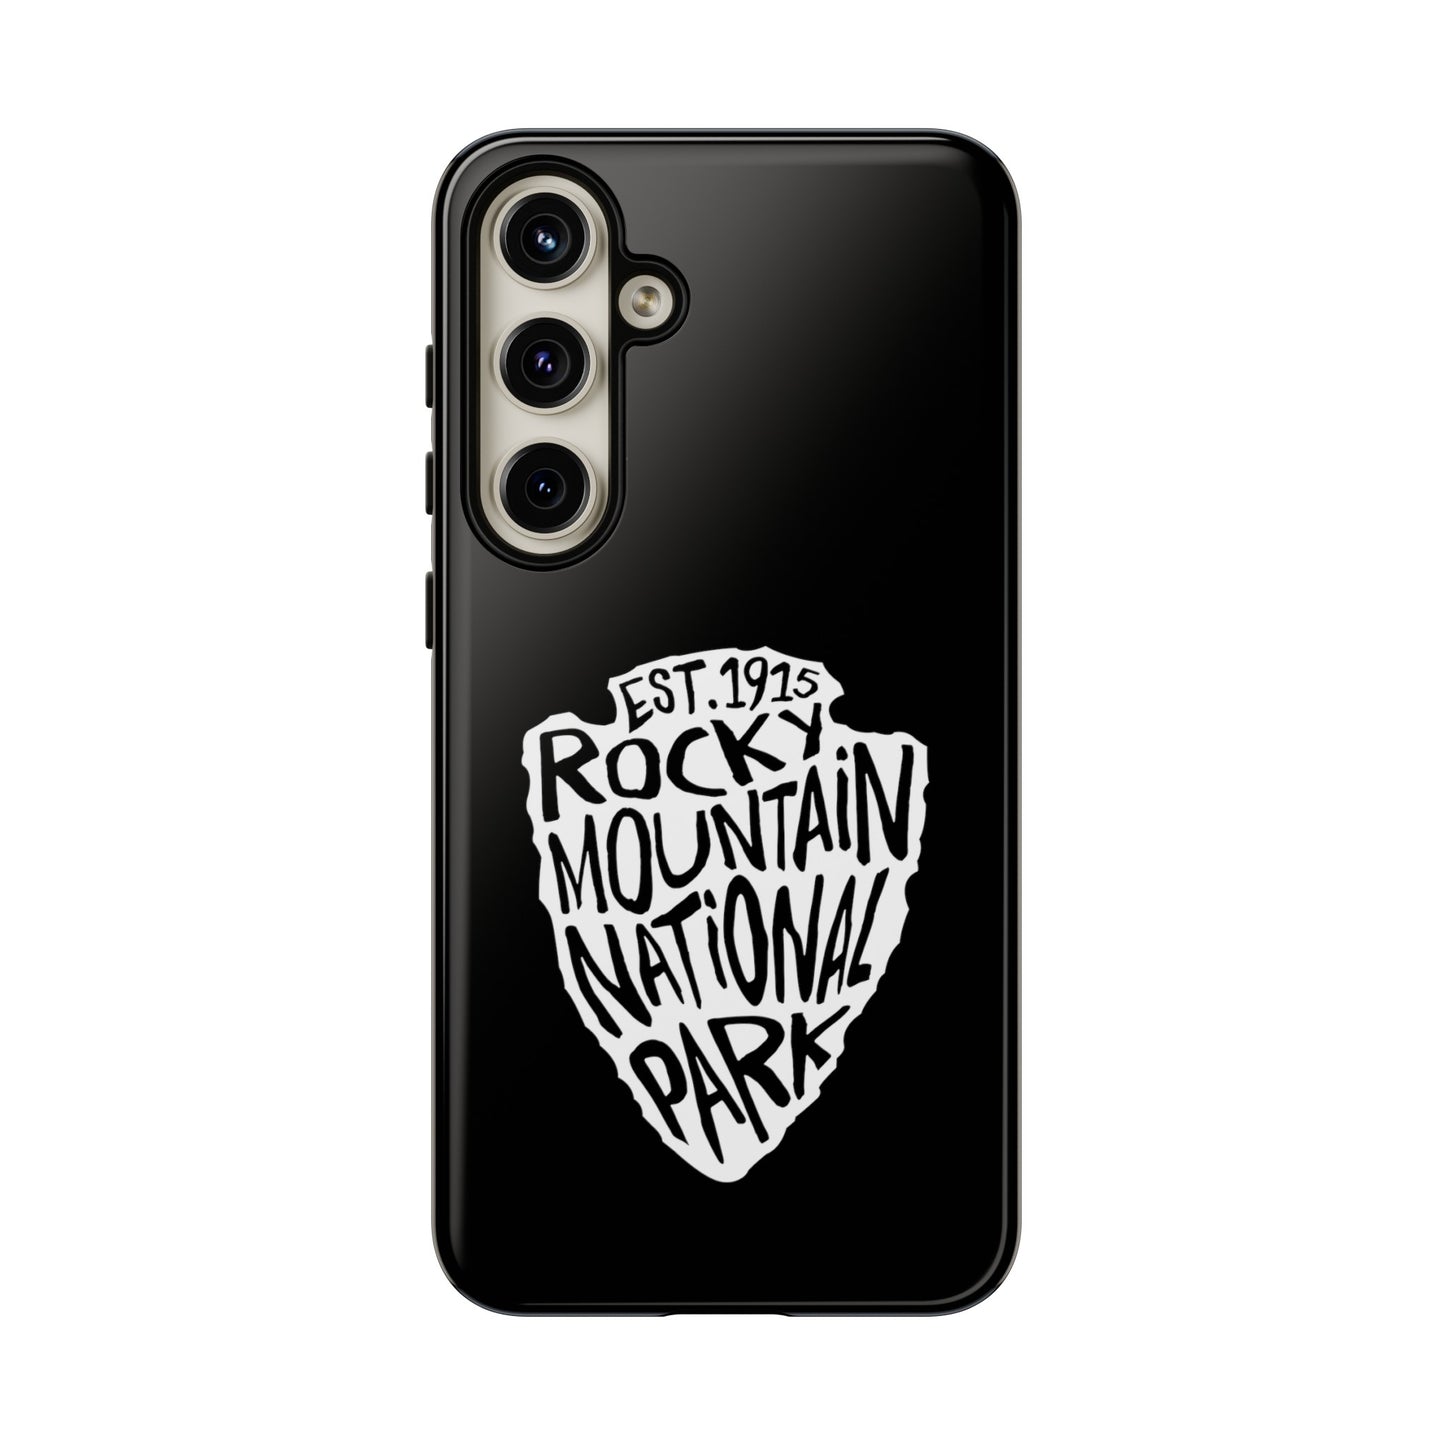 Rocky Mountain National Park Phone Case - Arrowhead Design